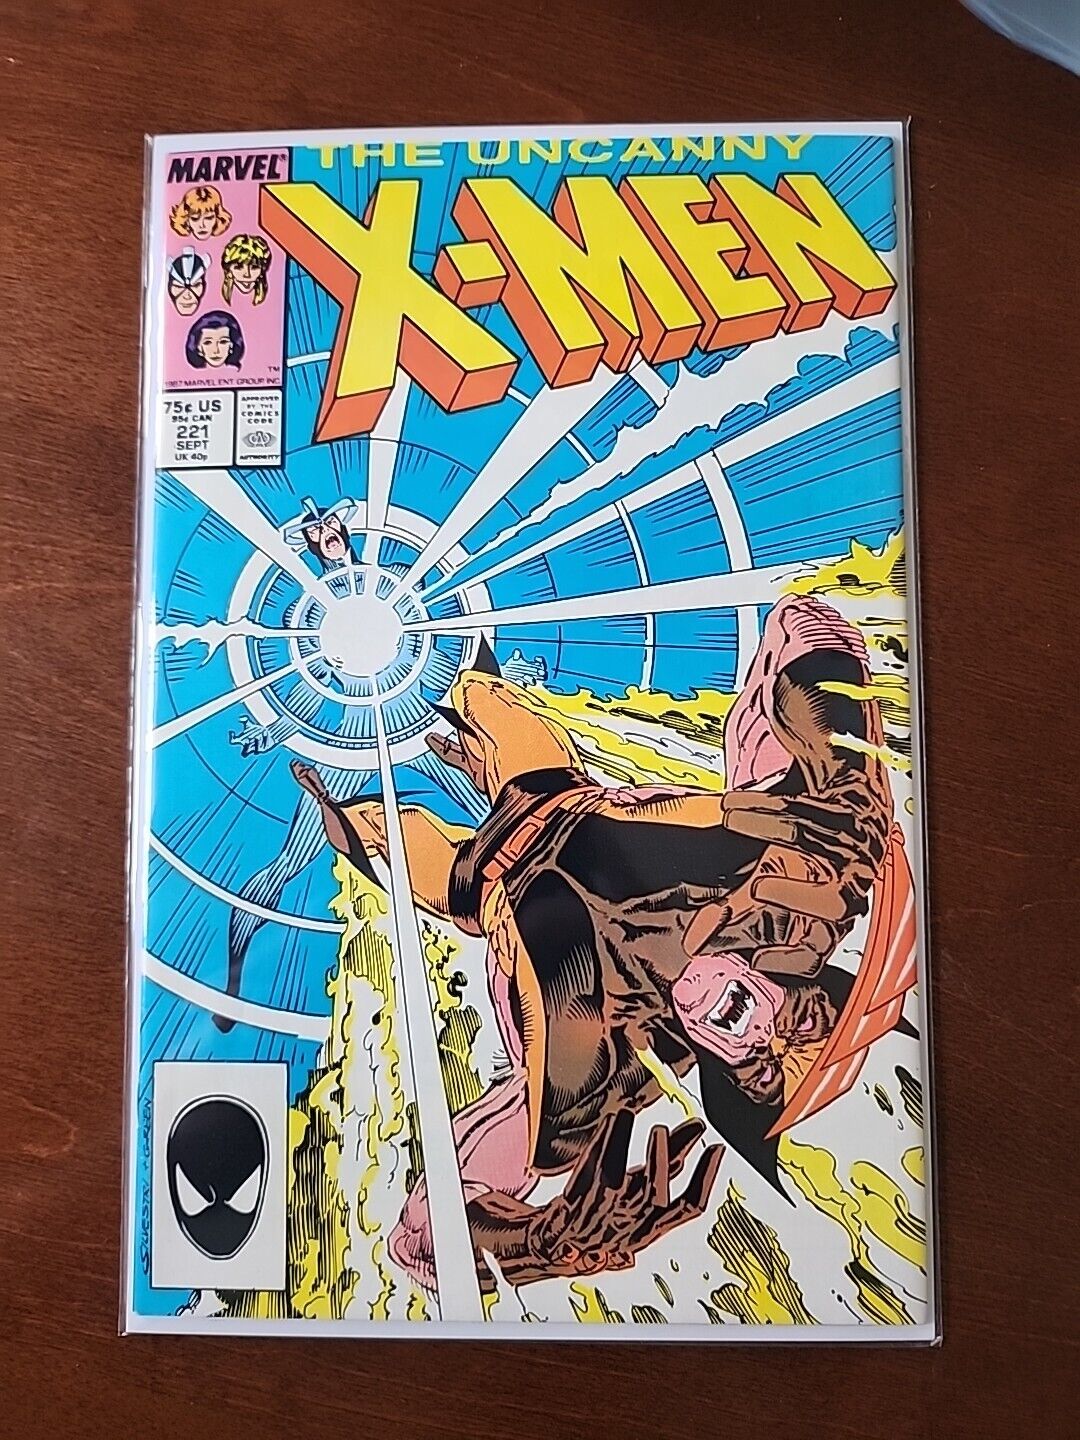 The Uncanny X-Men #221 (Marvel Comics September 1987)